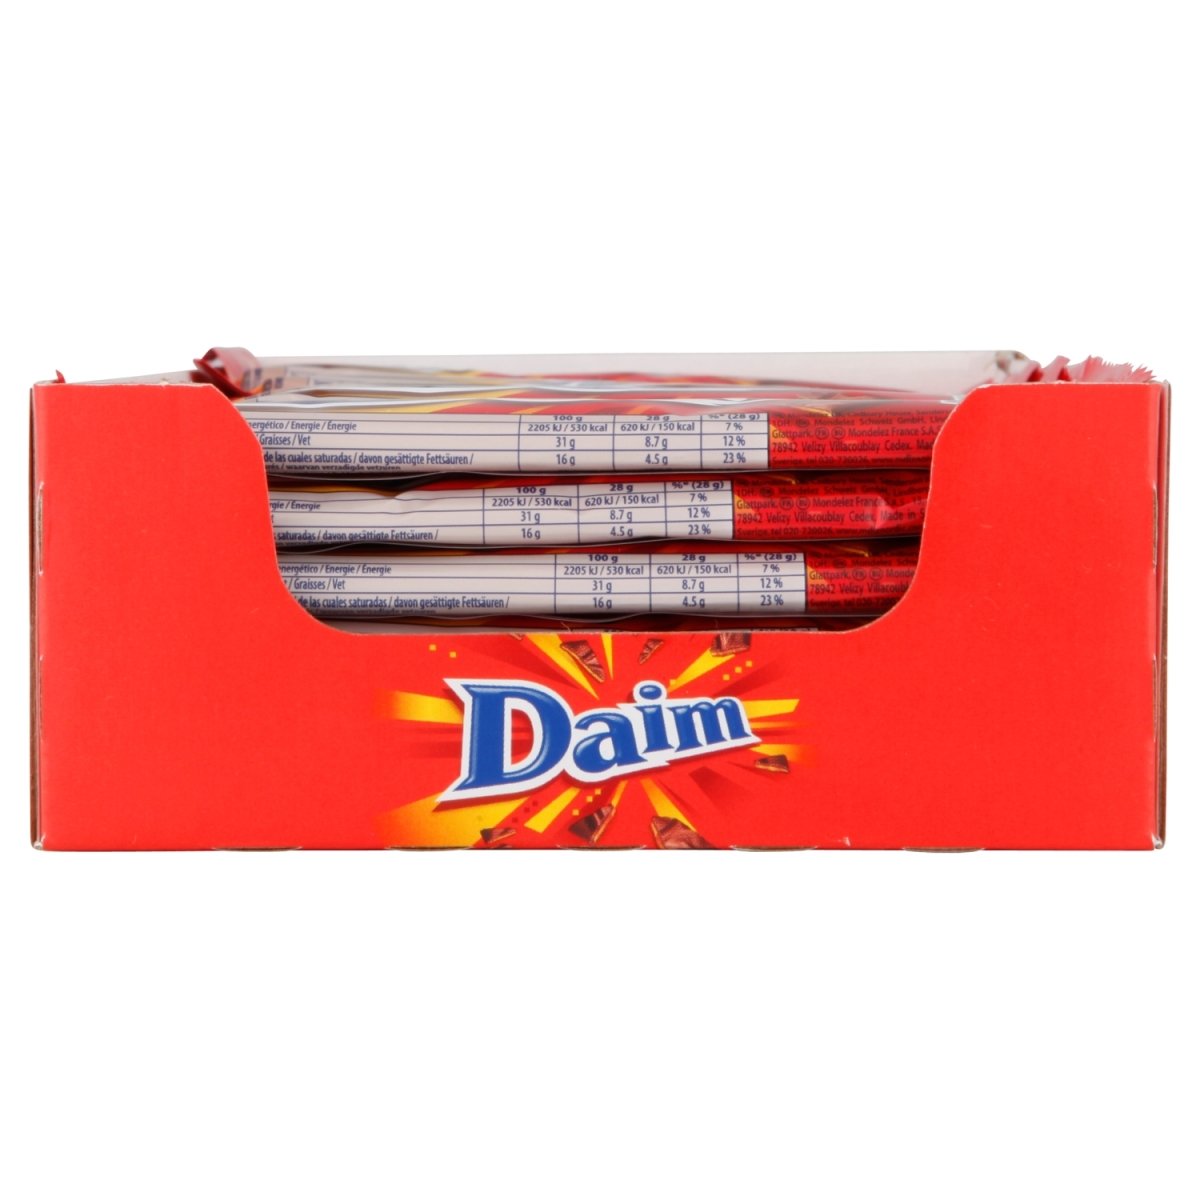 Daim Bars - Intamarque 7310511803001